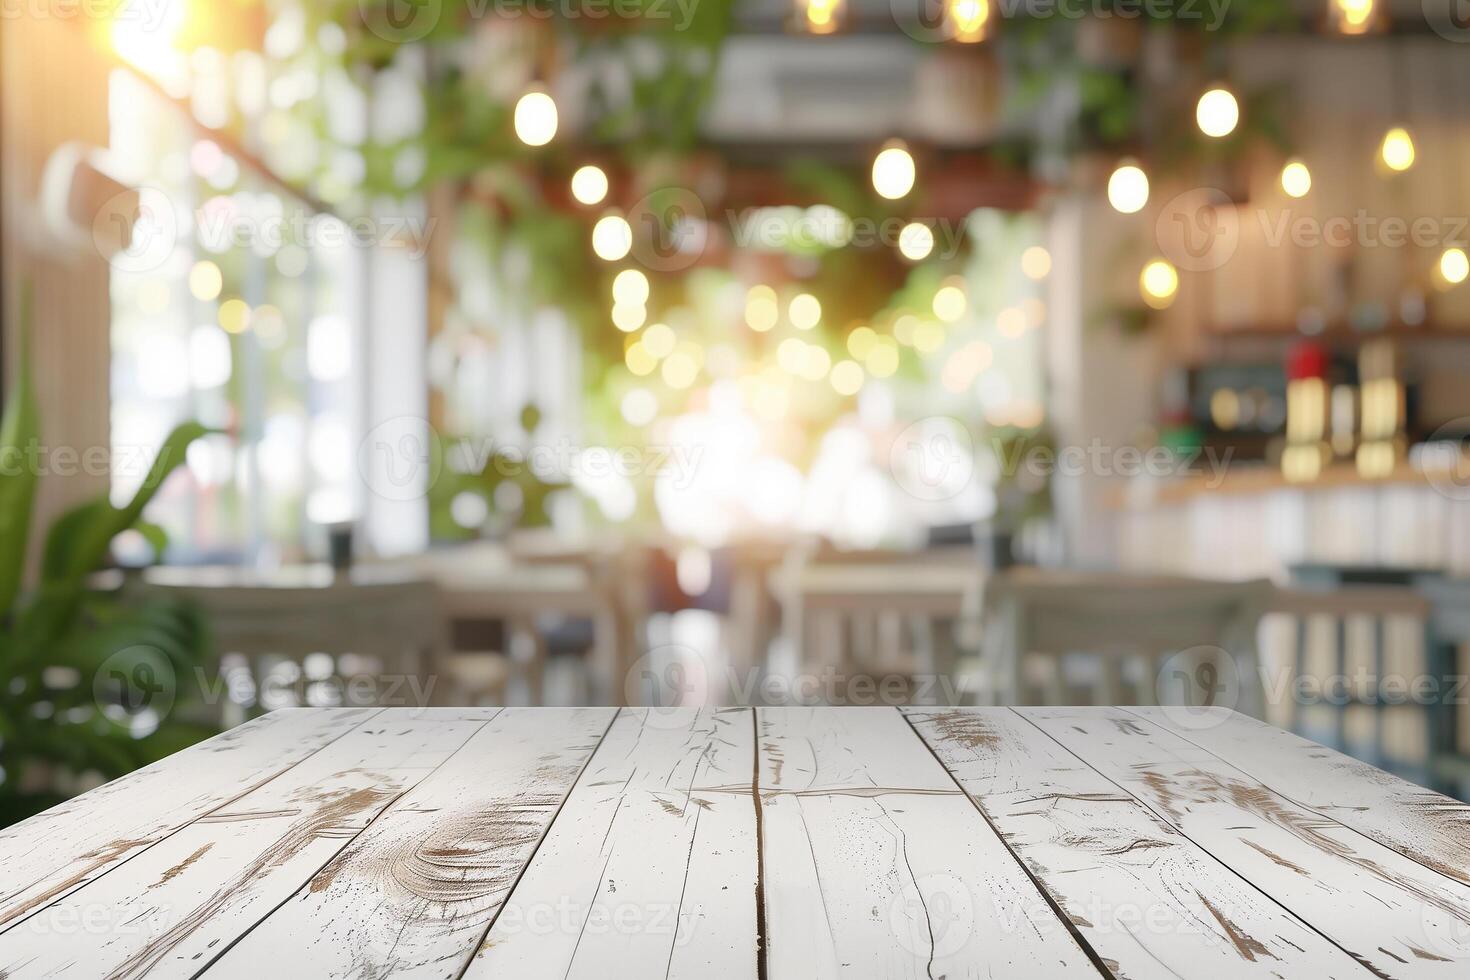 topo do branco de madeira mesa com borrado bokeh luz e suave natural luz dentro café fazer compras. cópia de espaço foto